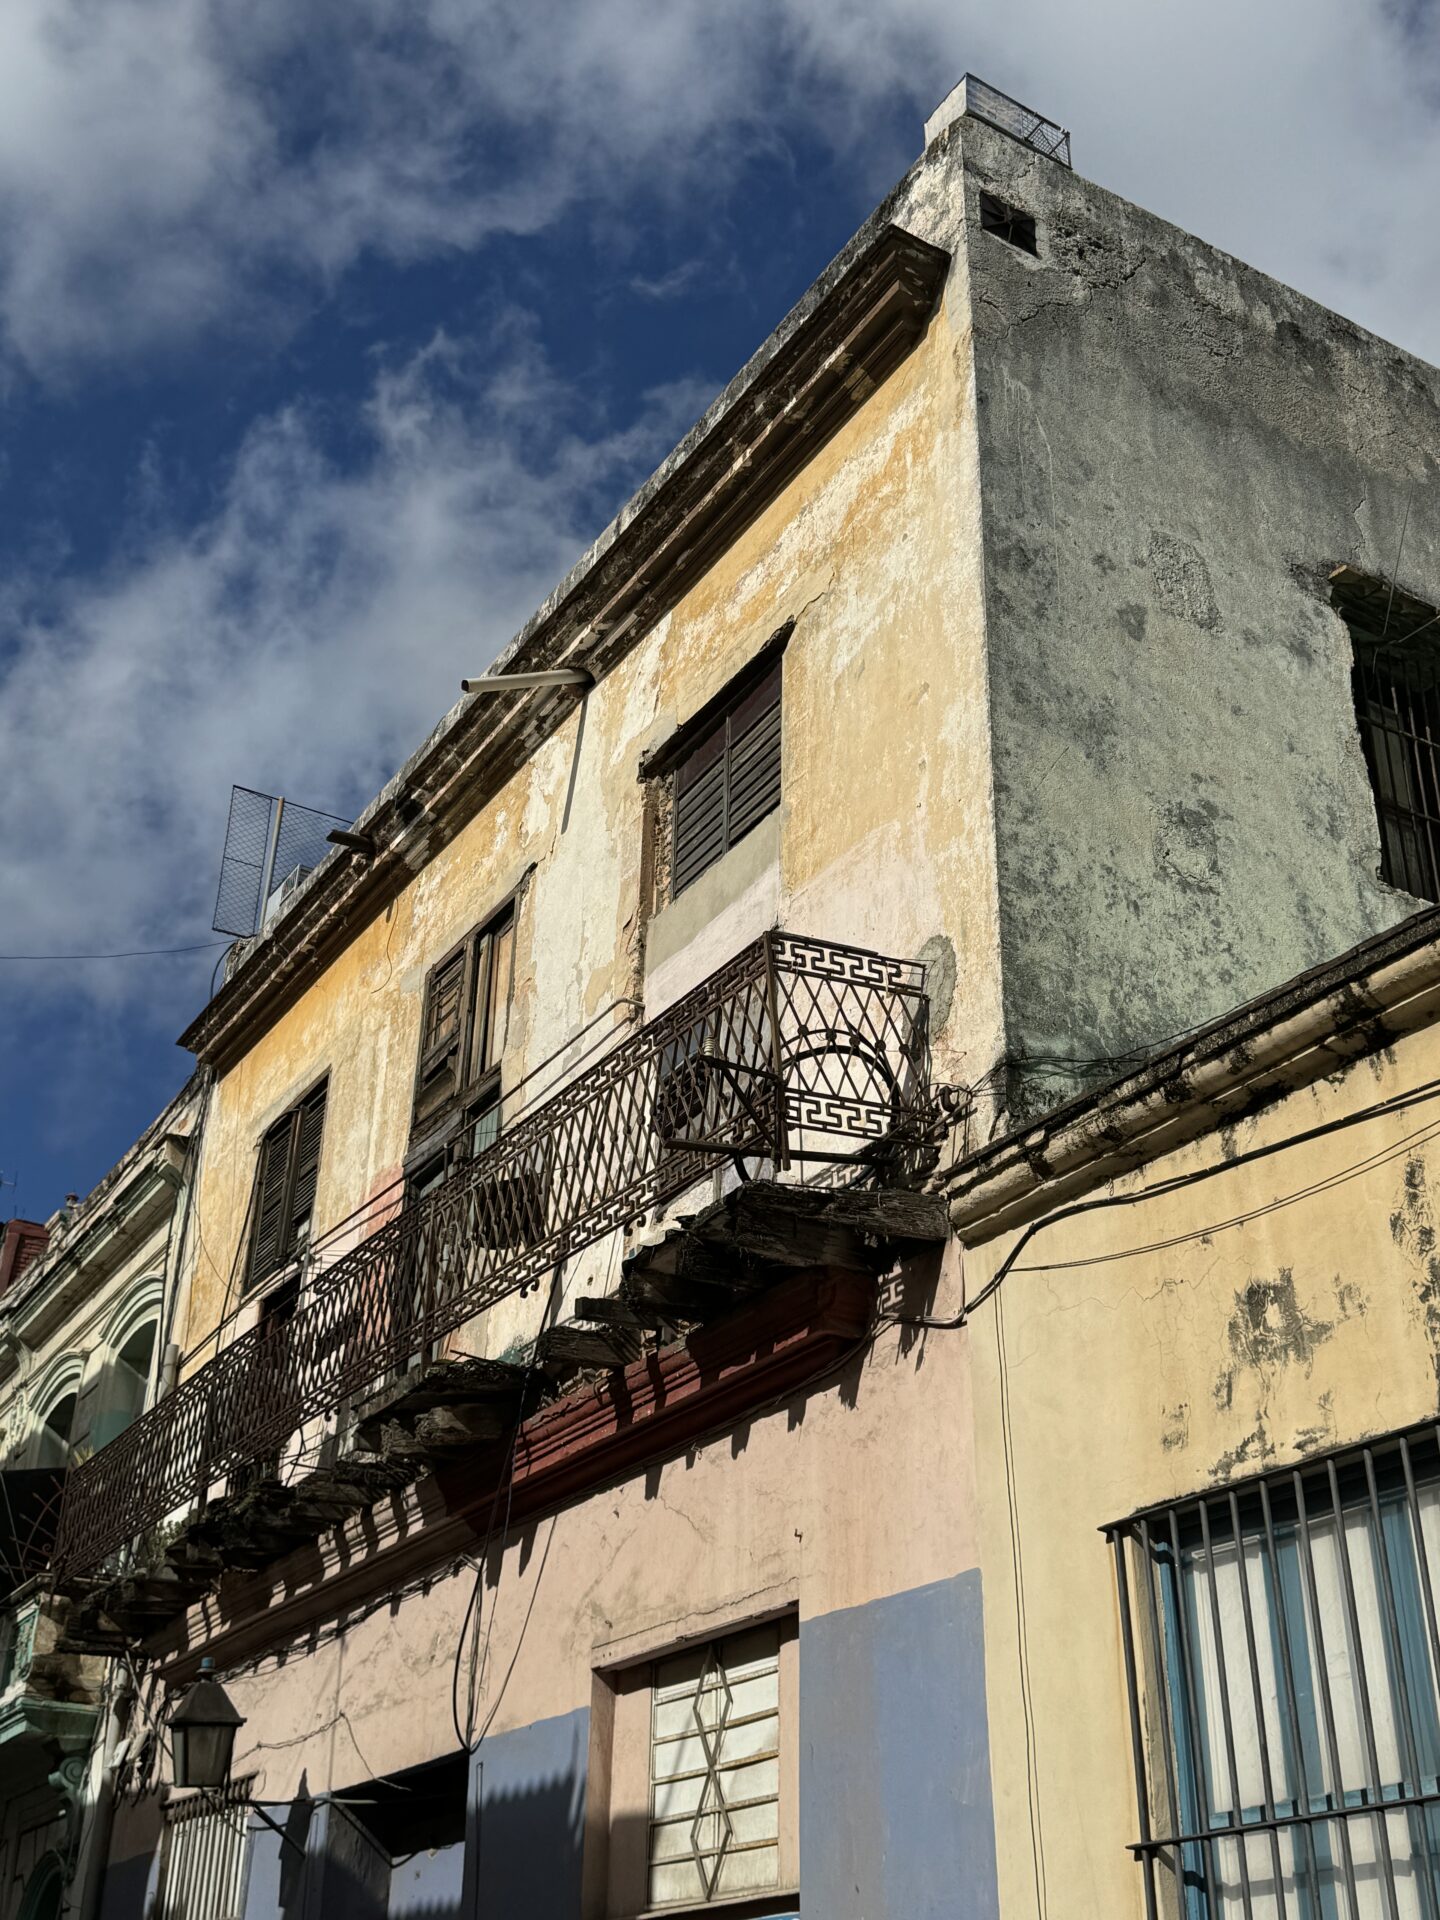 Neighborhood building, Old Havana, Cuba by Carol Schiraldi of Carol's Little World
